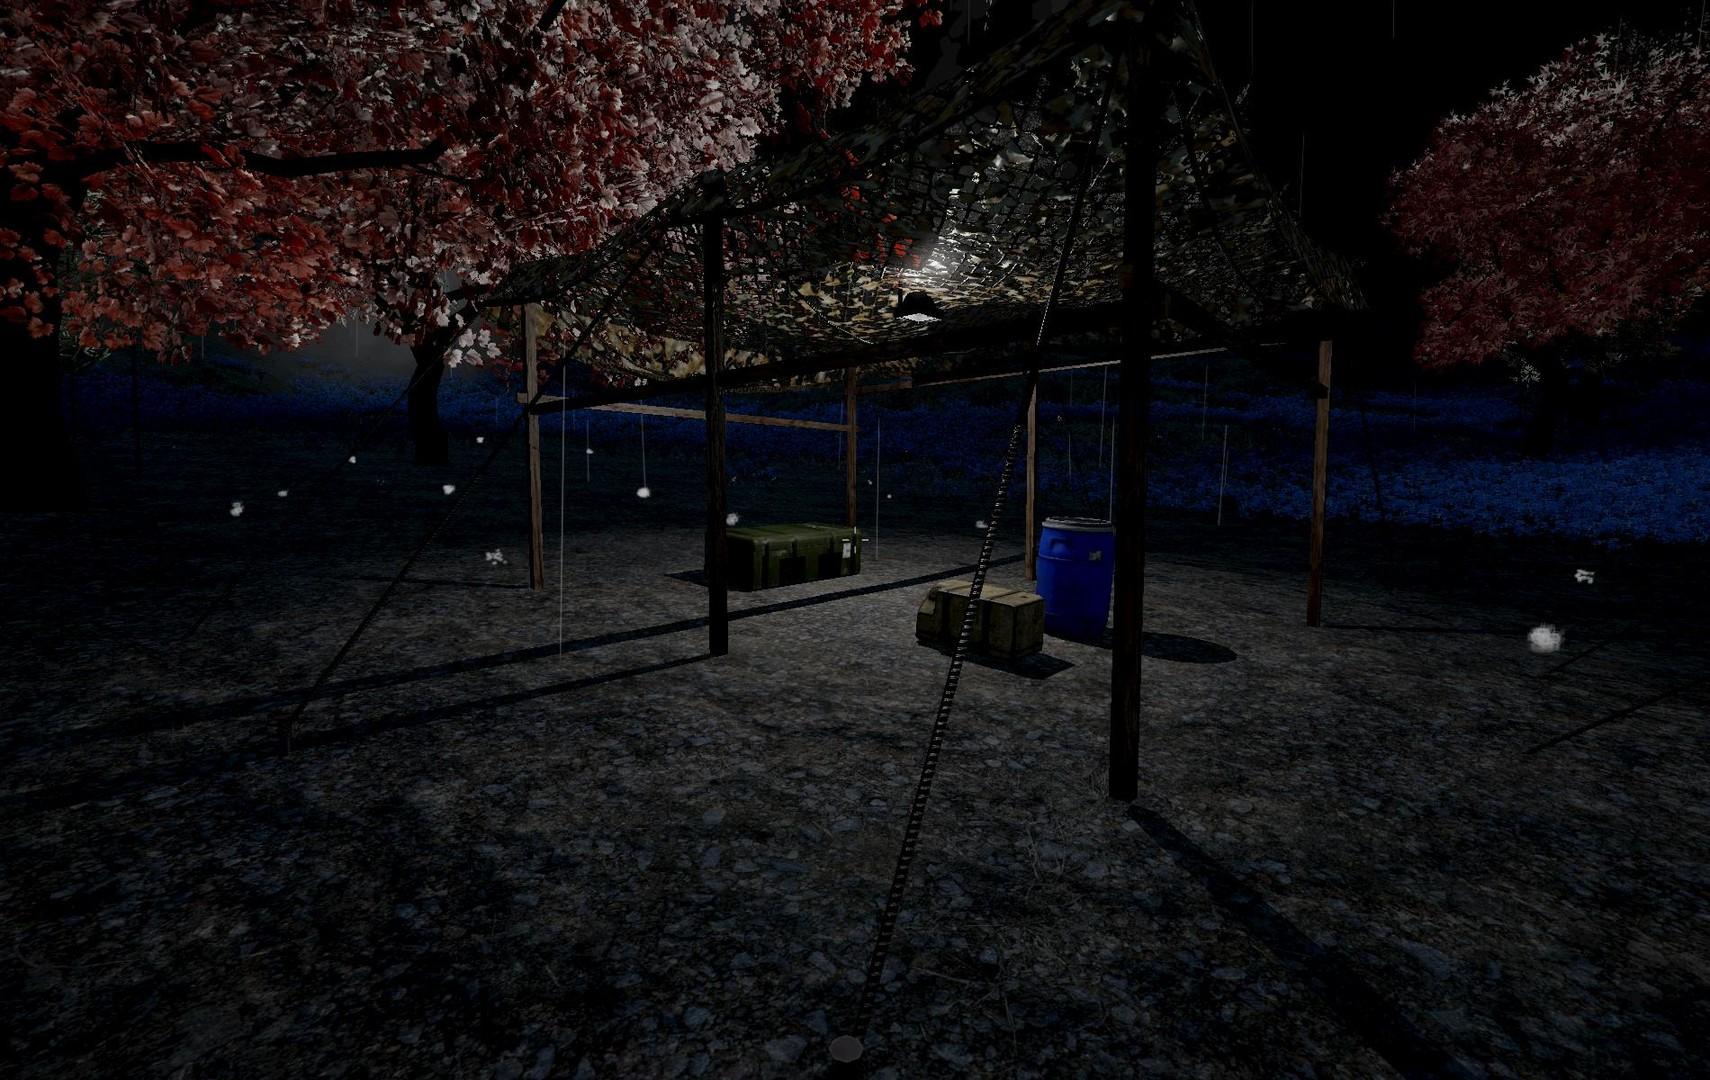 Screenshot №2 from game Red Wake Carnage